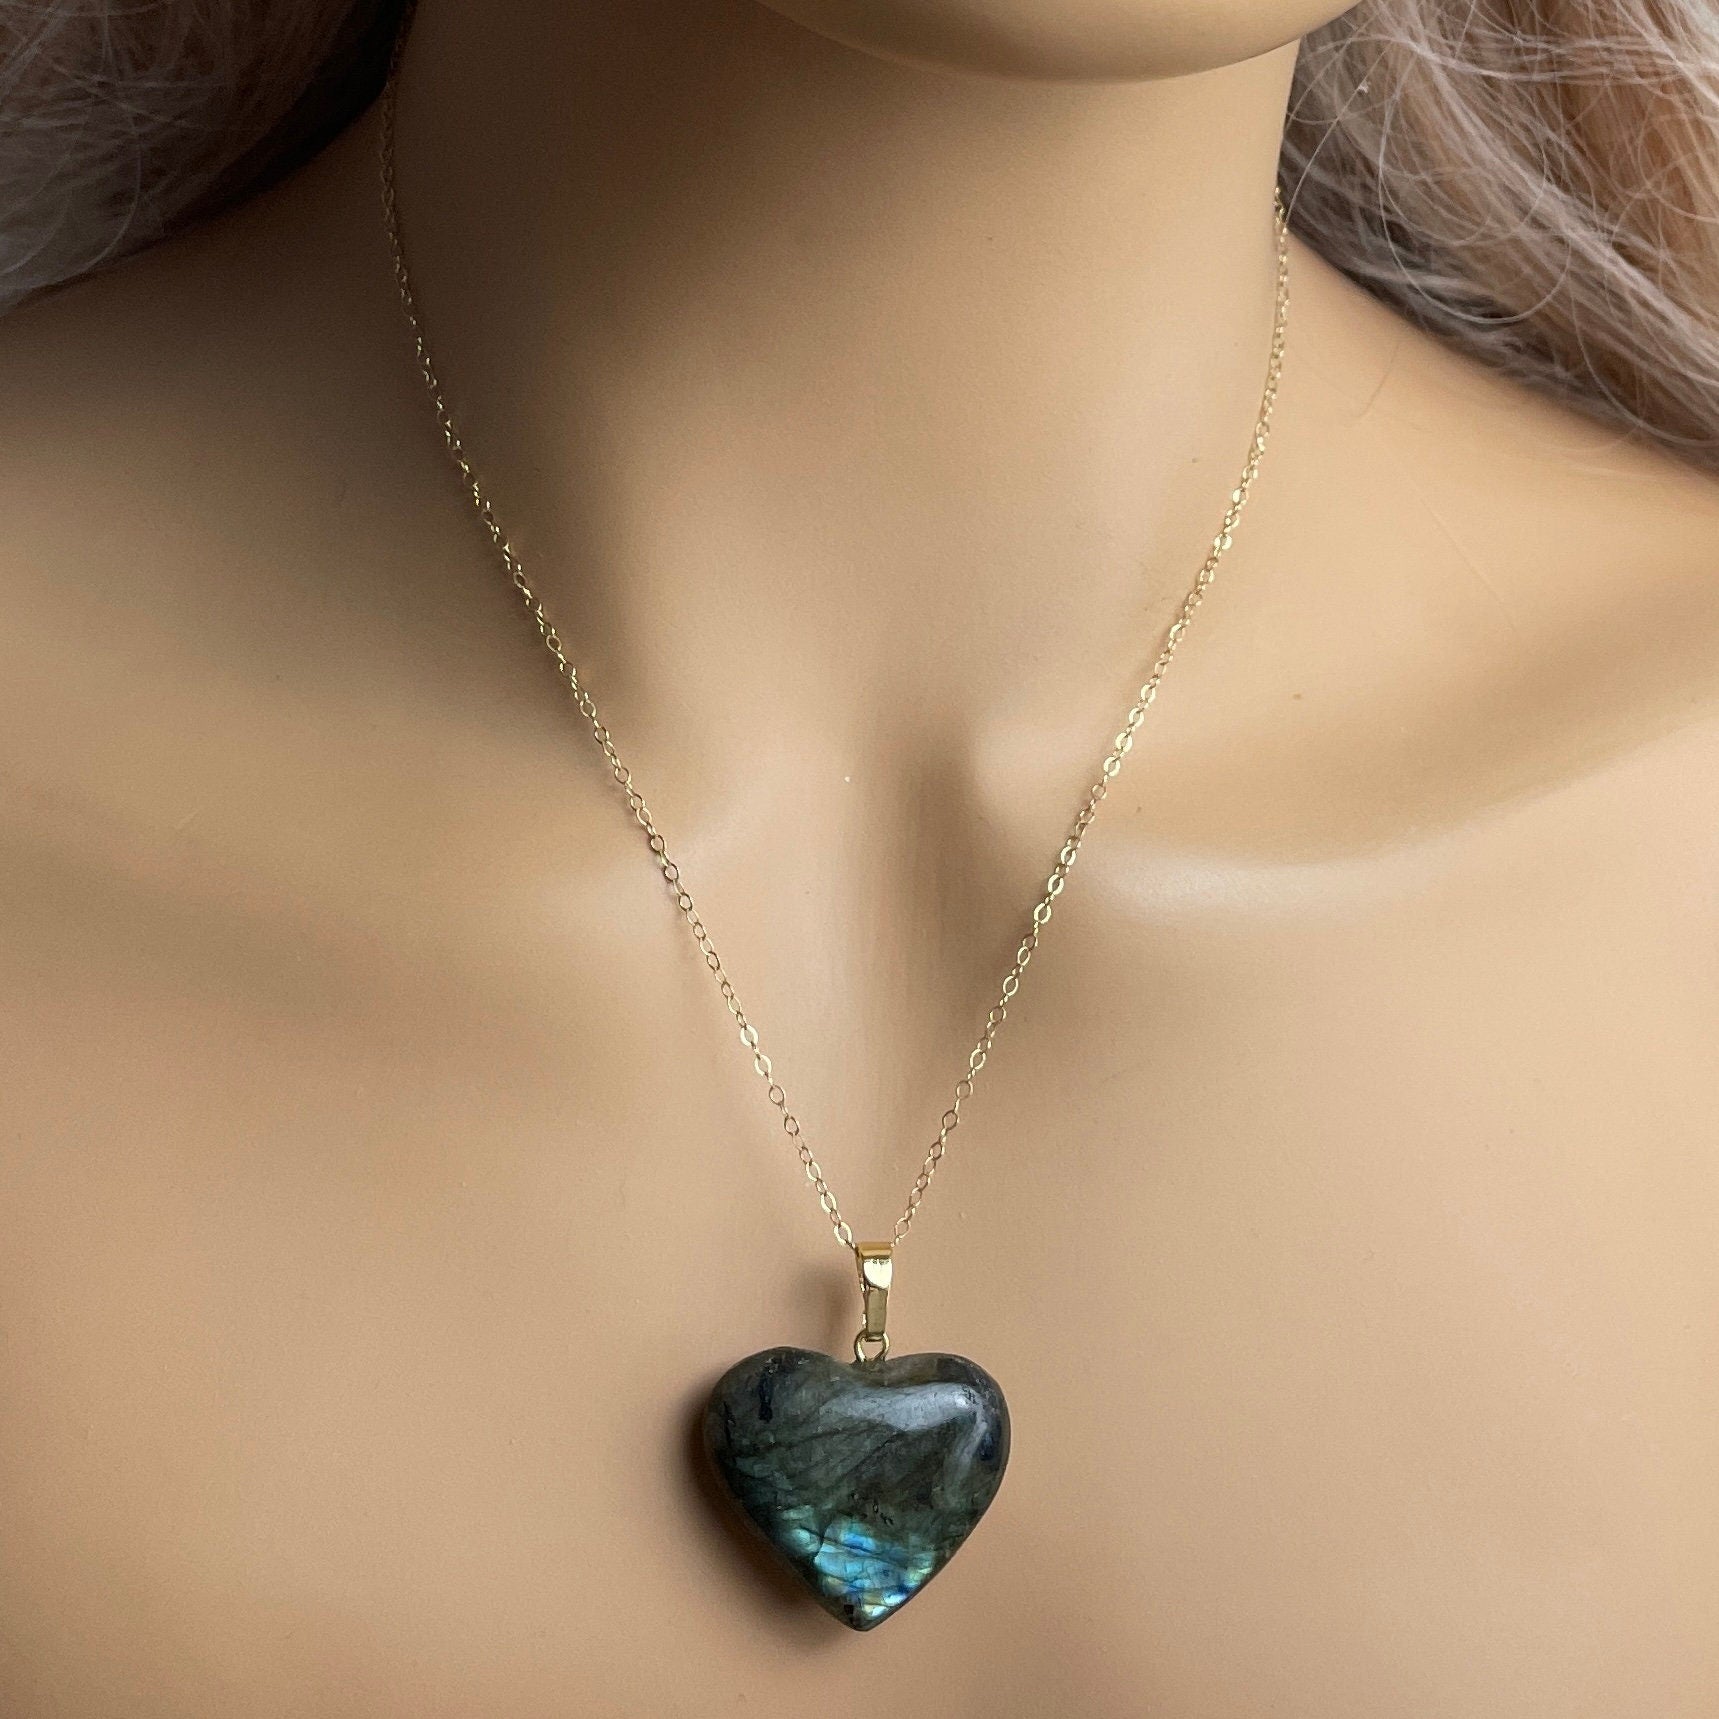 Crystal Heart Pendant Necklace Gold, Labradorite Gemstone, Blue Flash Gray Crystal Pendant, Gift Women, M7-29